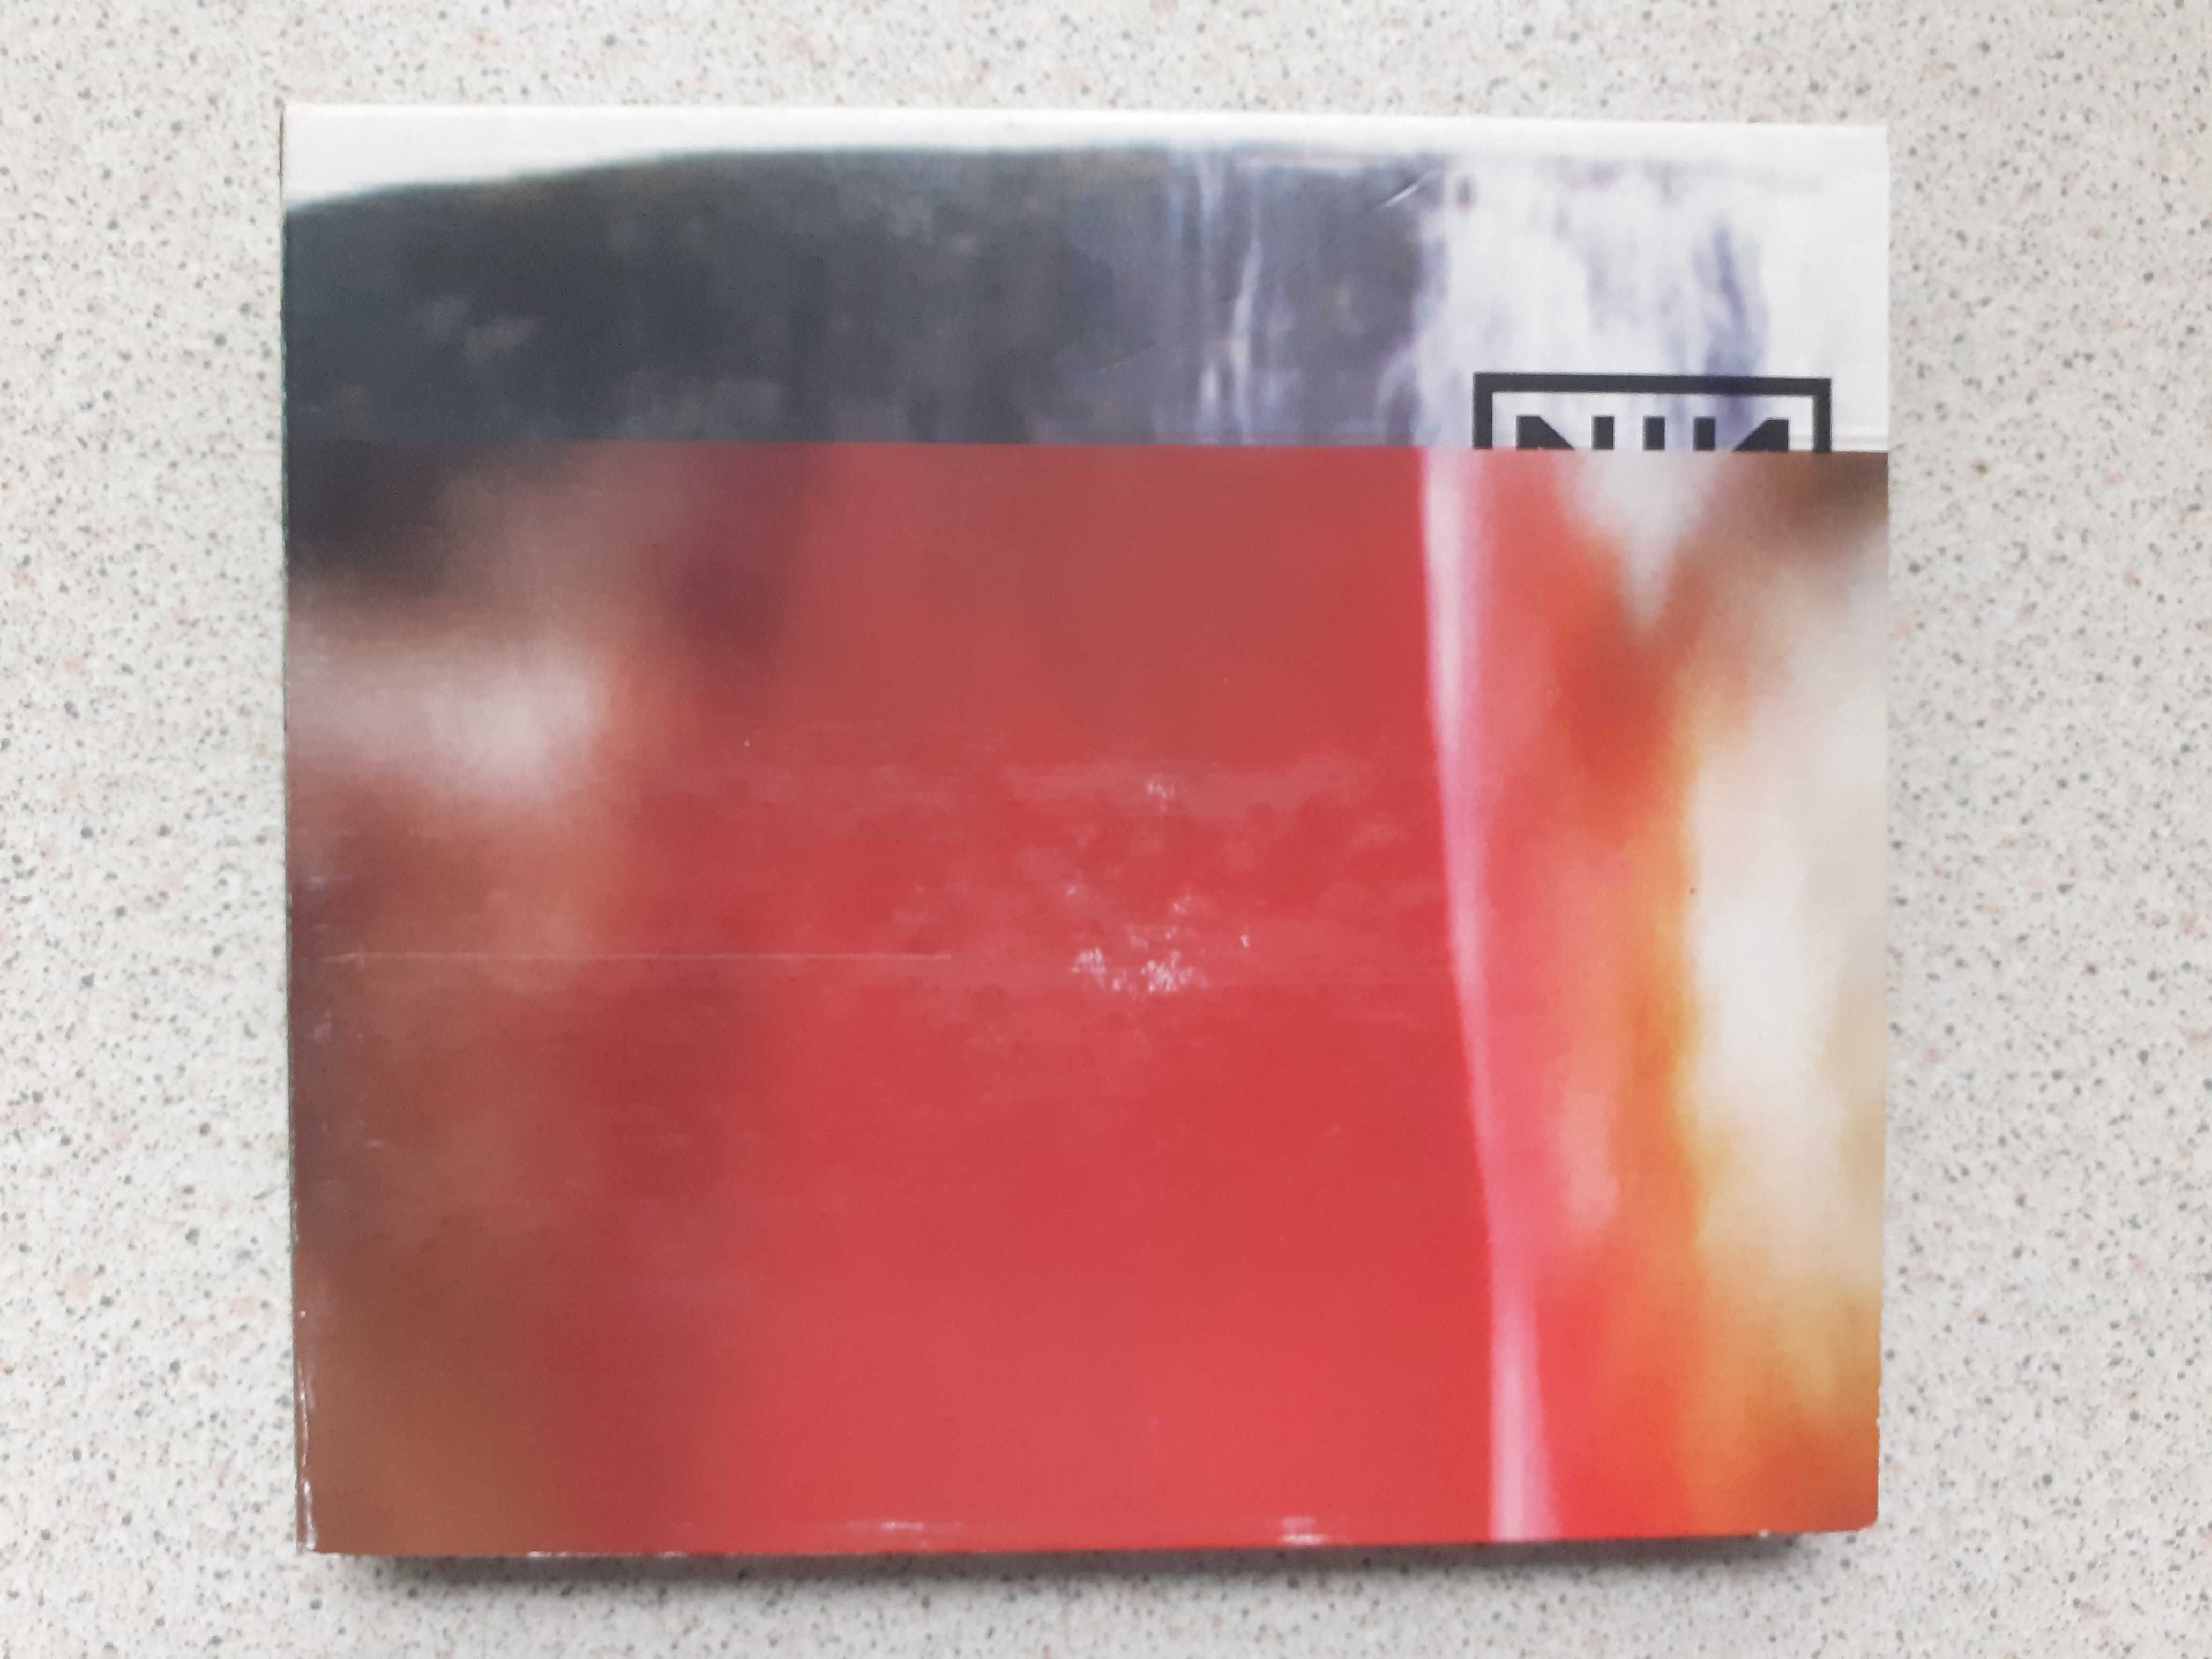 CD - Nine inch nails - The fragile (2cd)